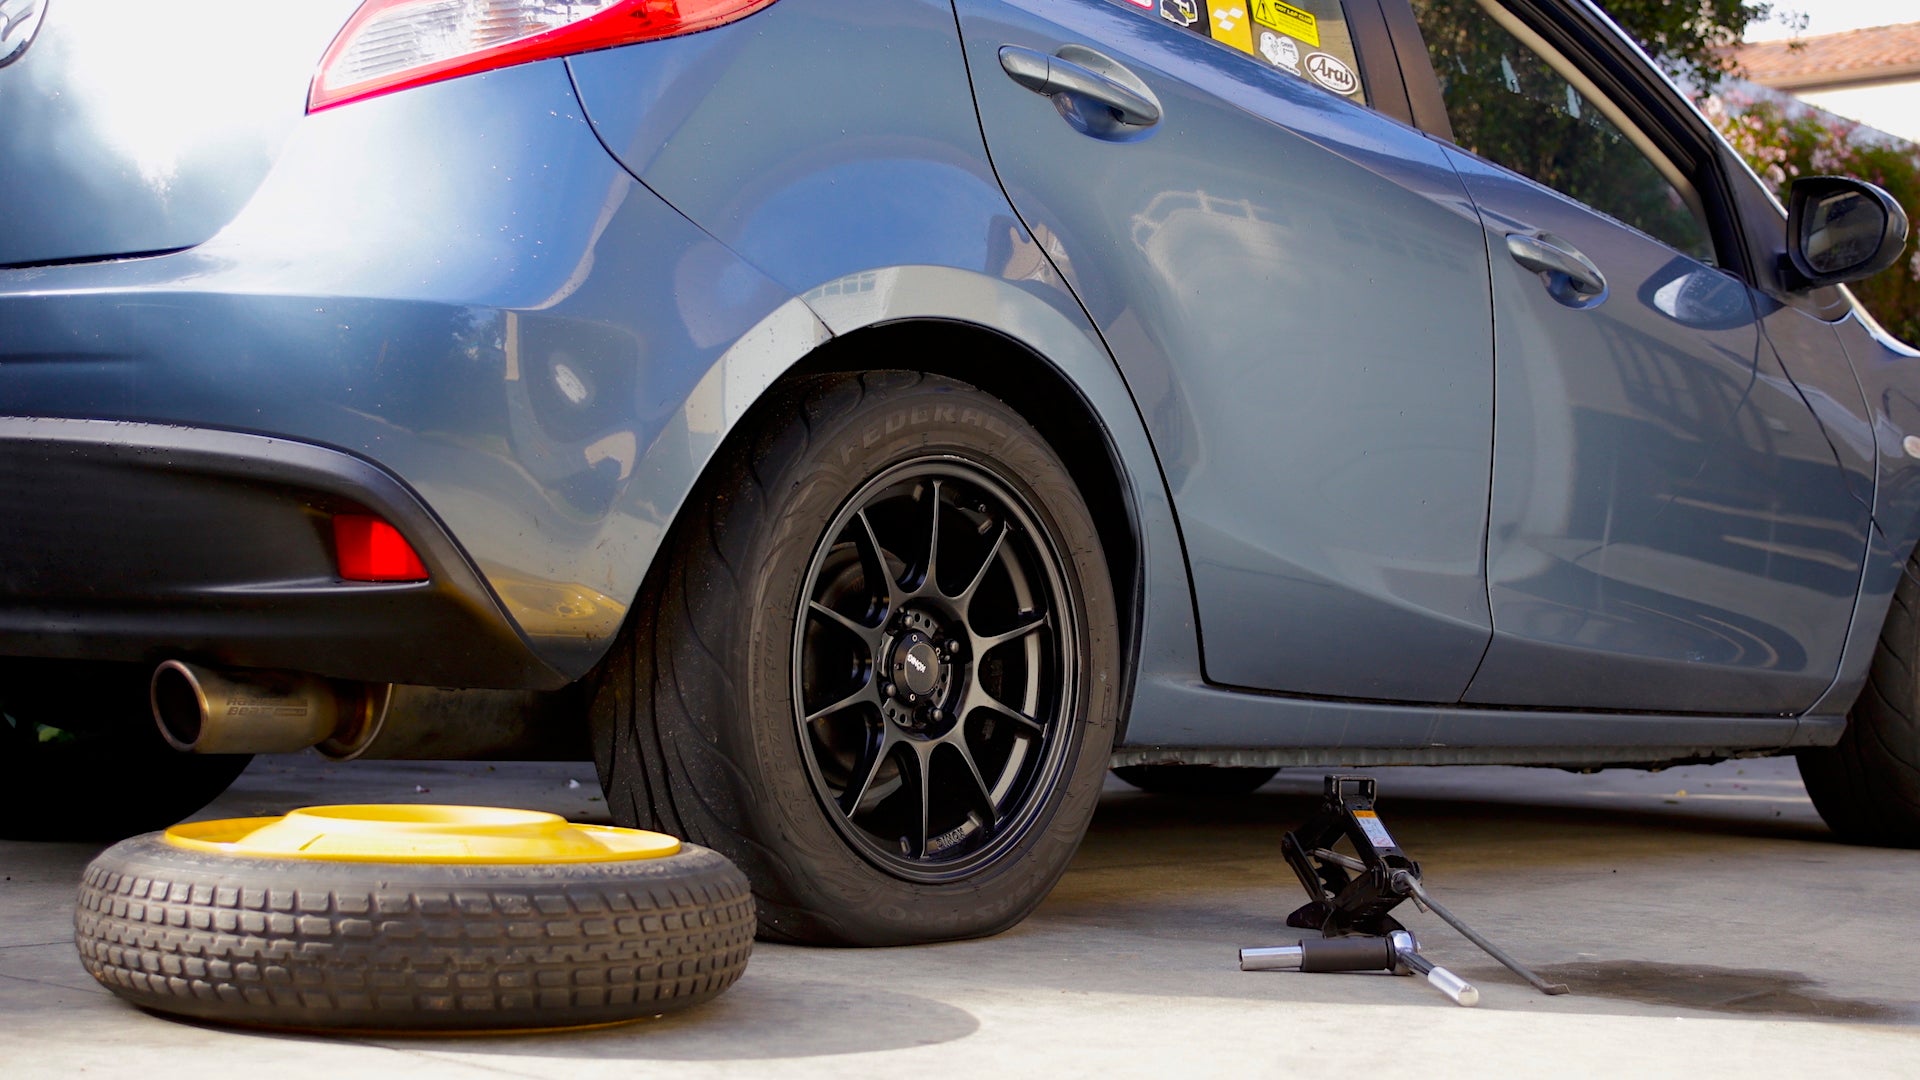 How Do Tire Pressure Sensors Work?